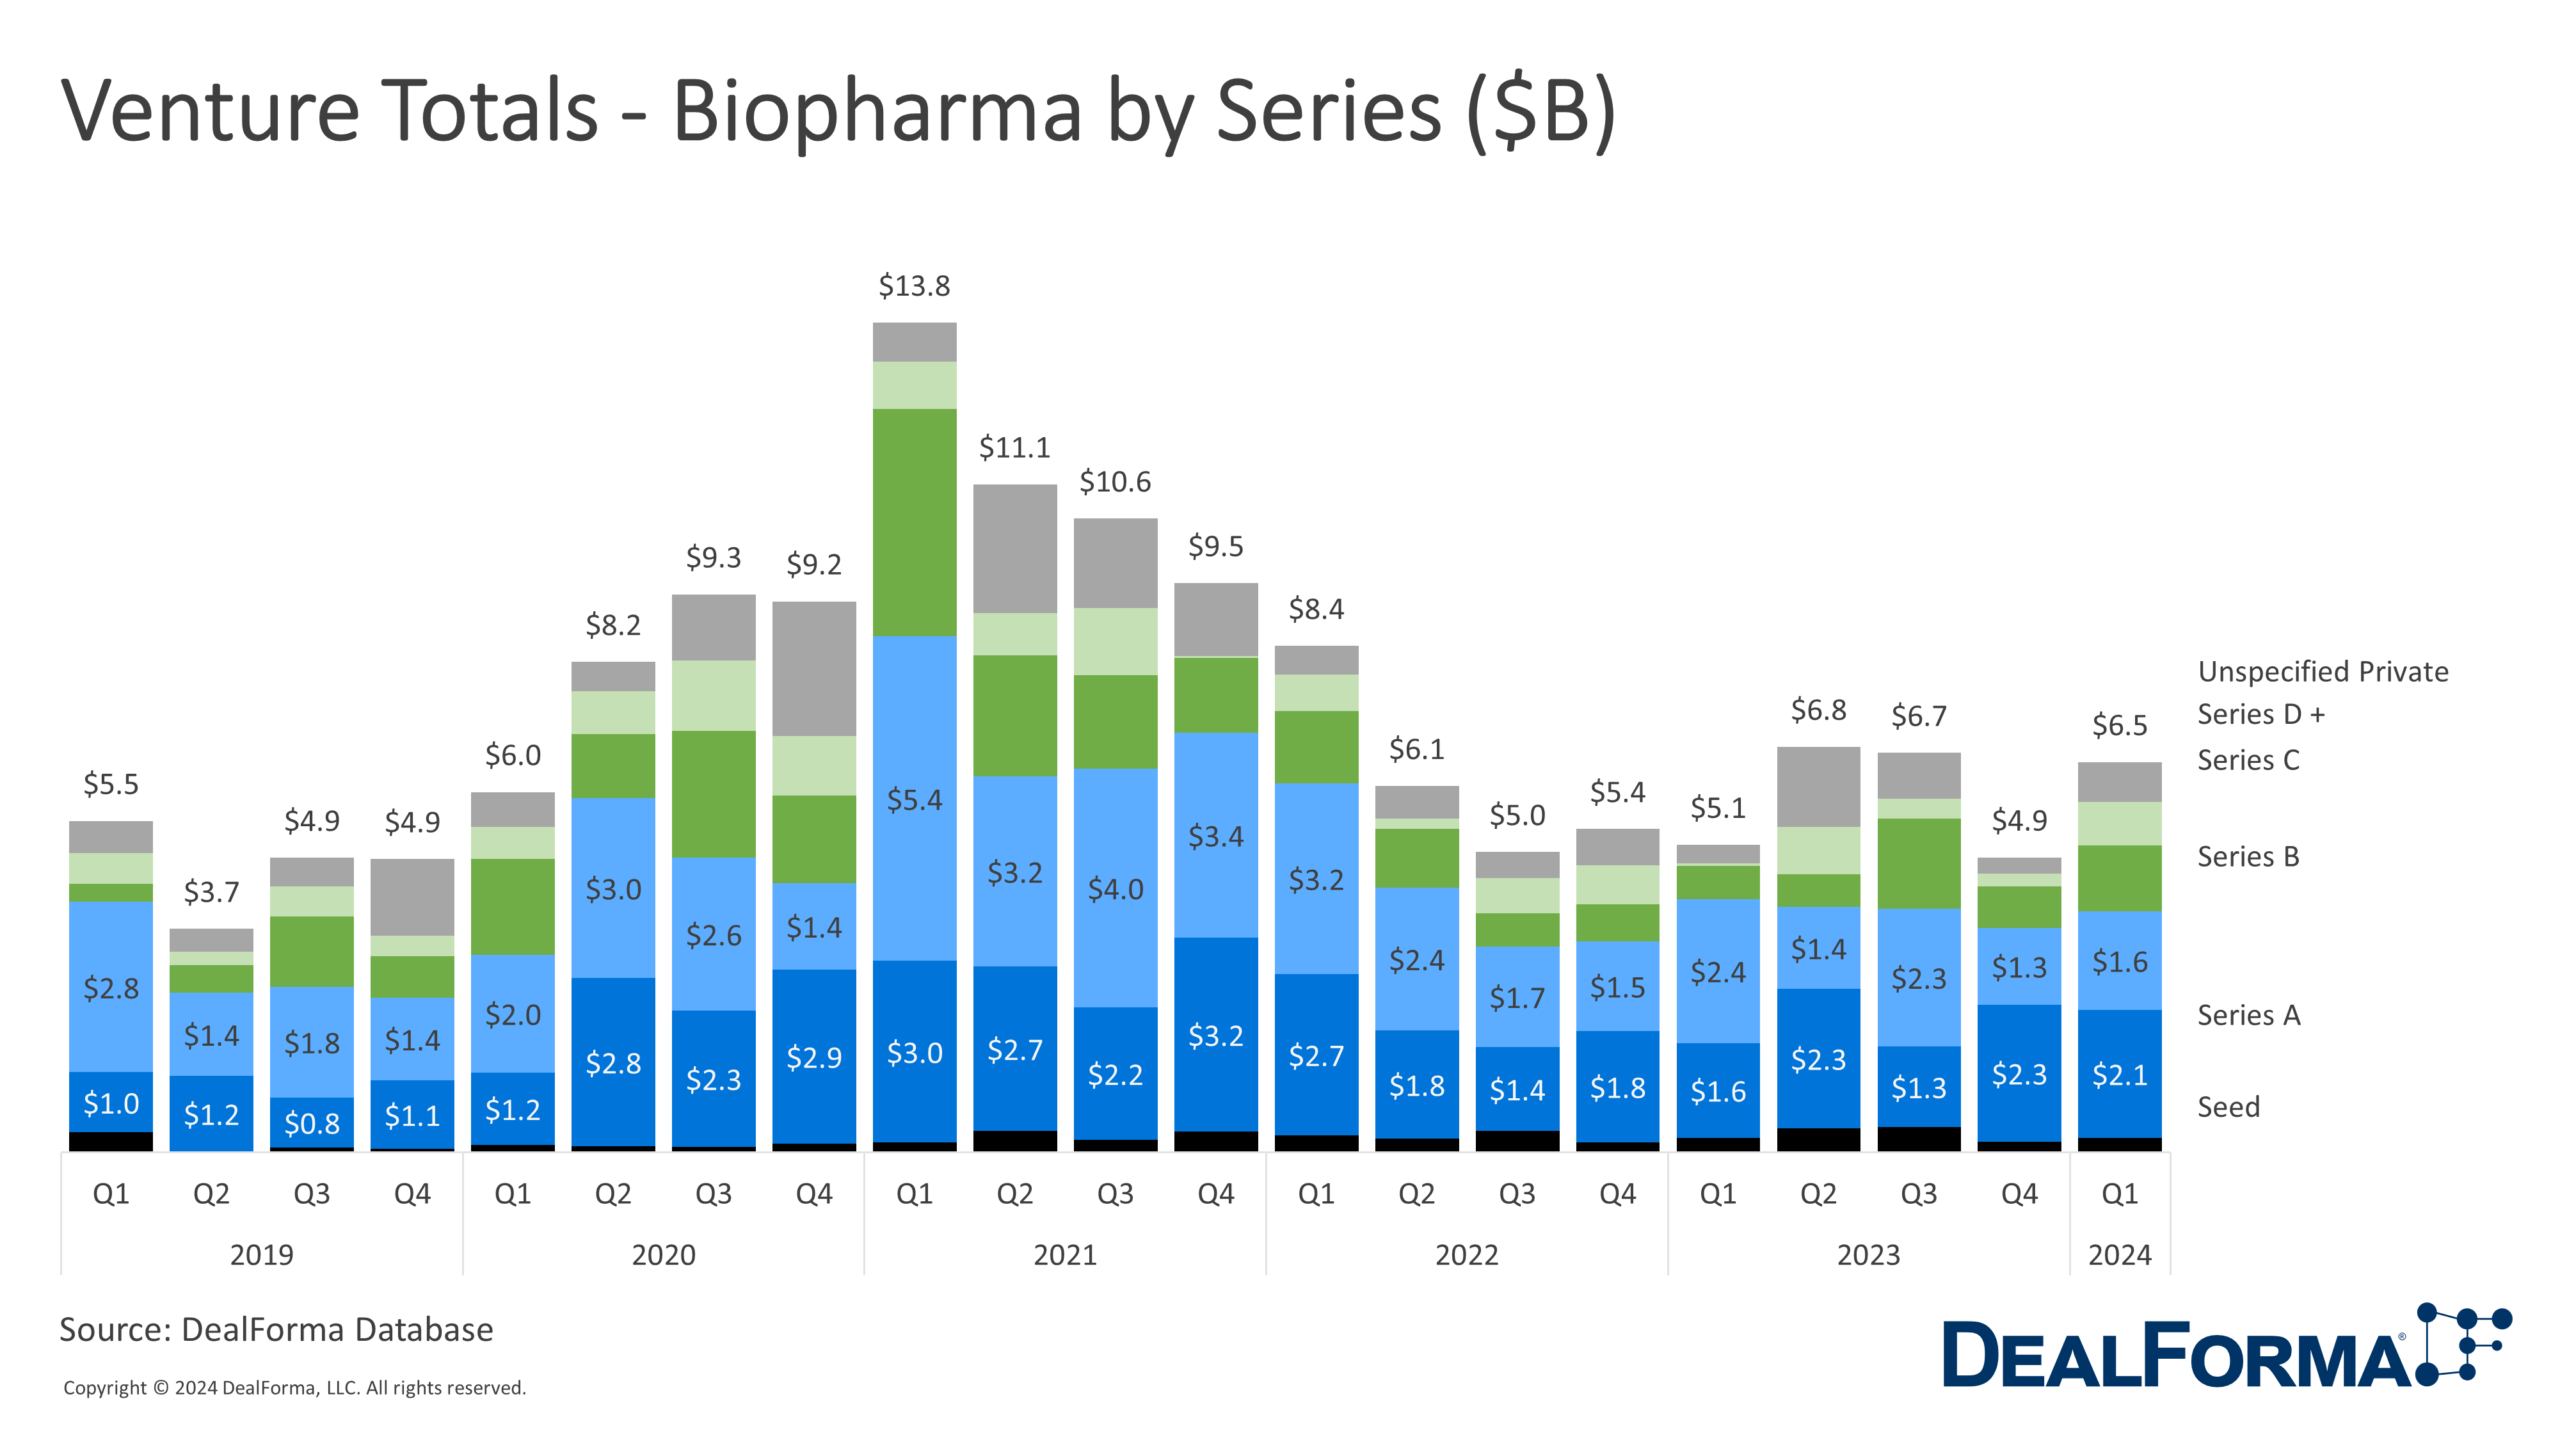 Venture Totals - Biopharma by Series ($B)